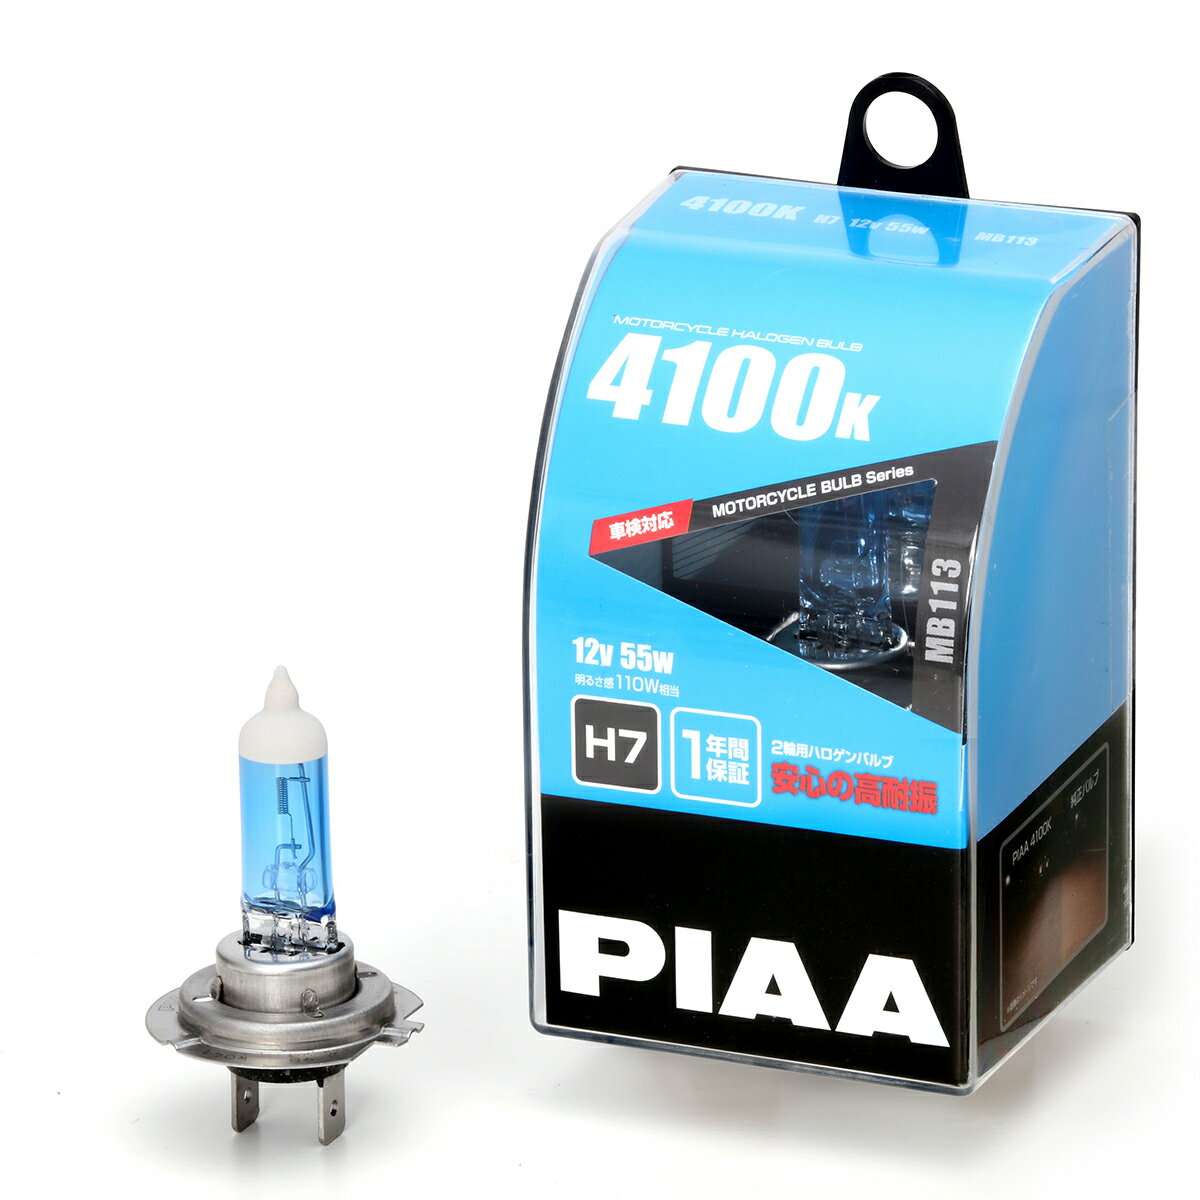 PIAA PIAA ピア MB113 H7 12V55W 4100K 価格比較 商品価格ナビ